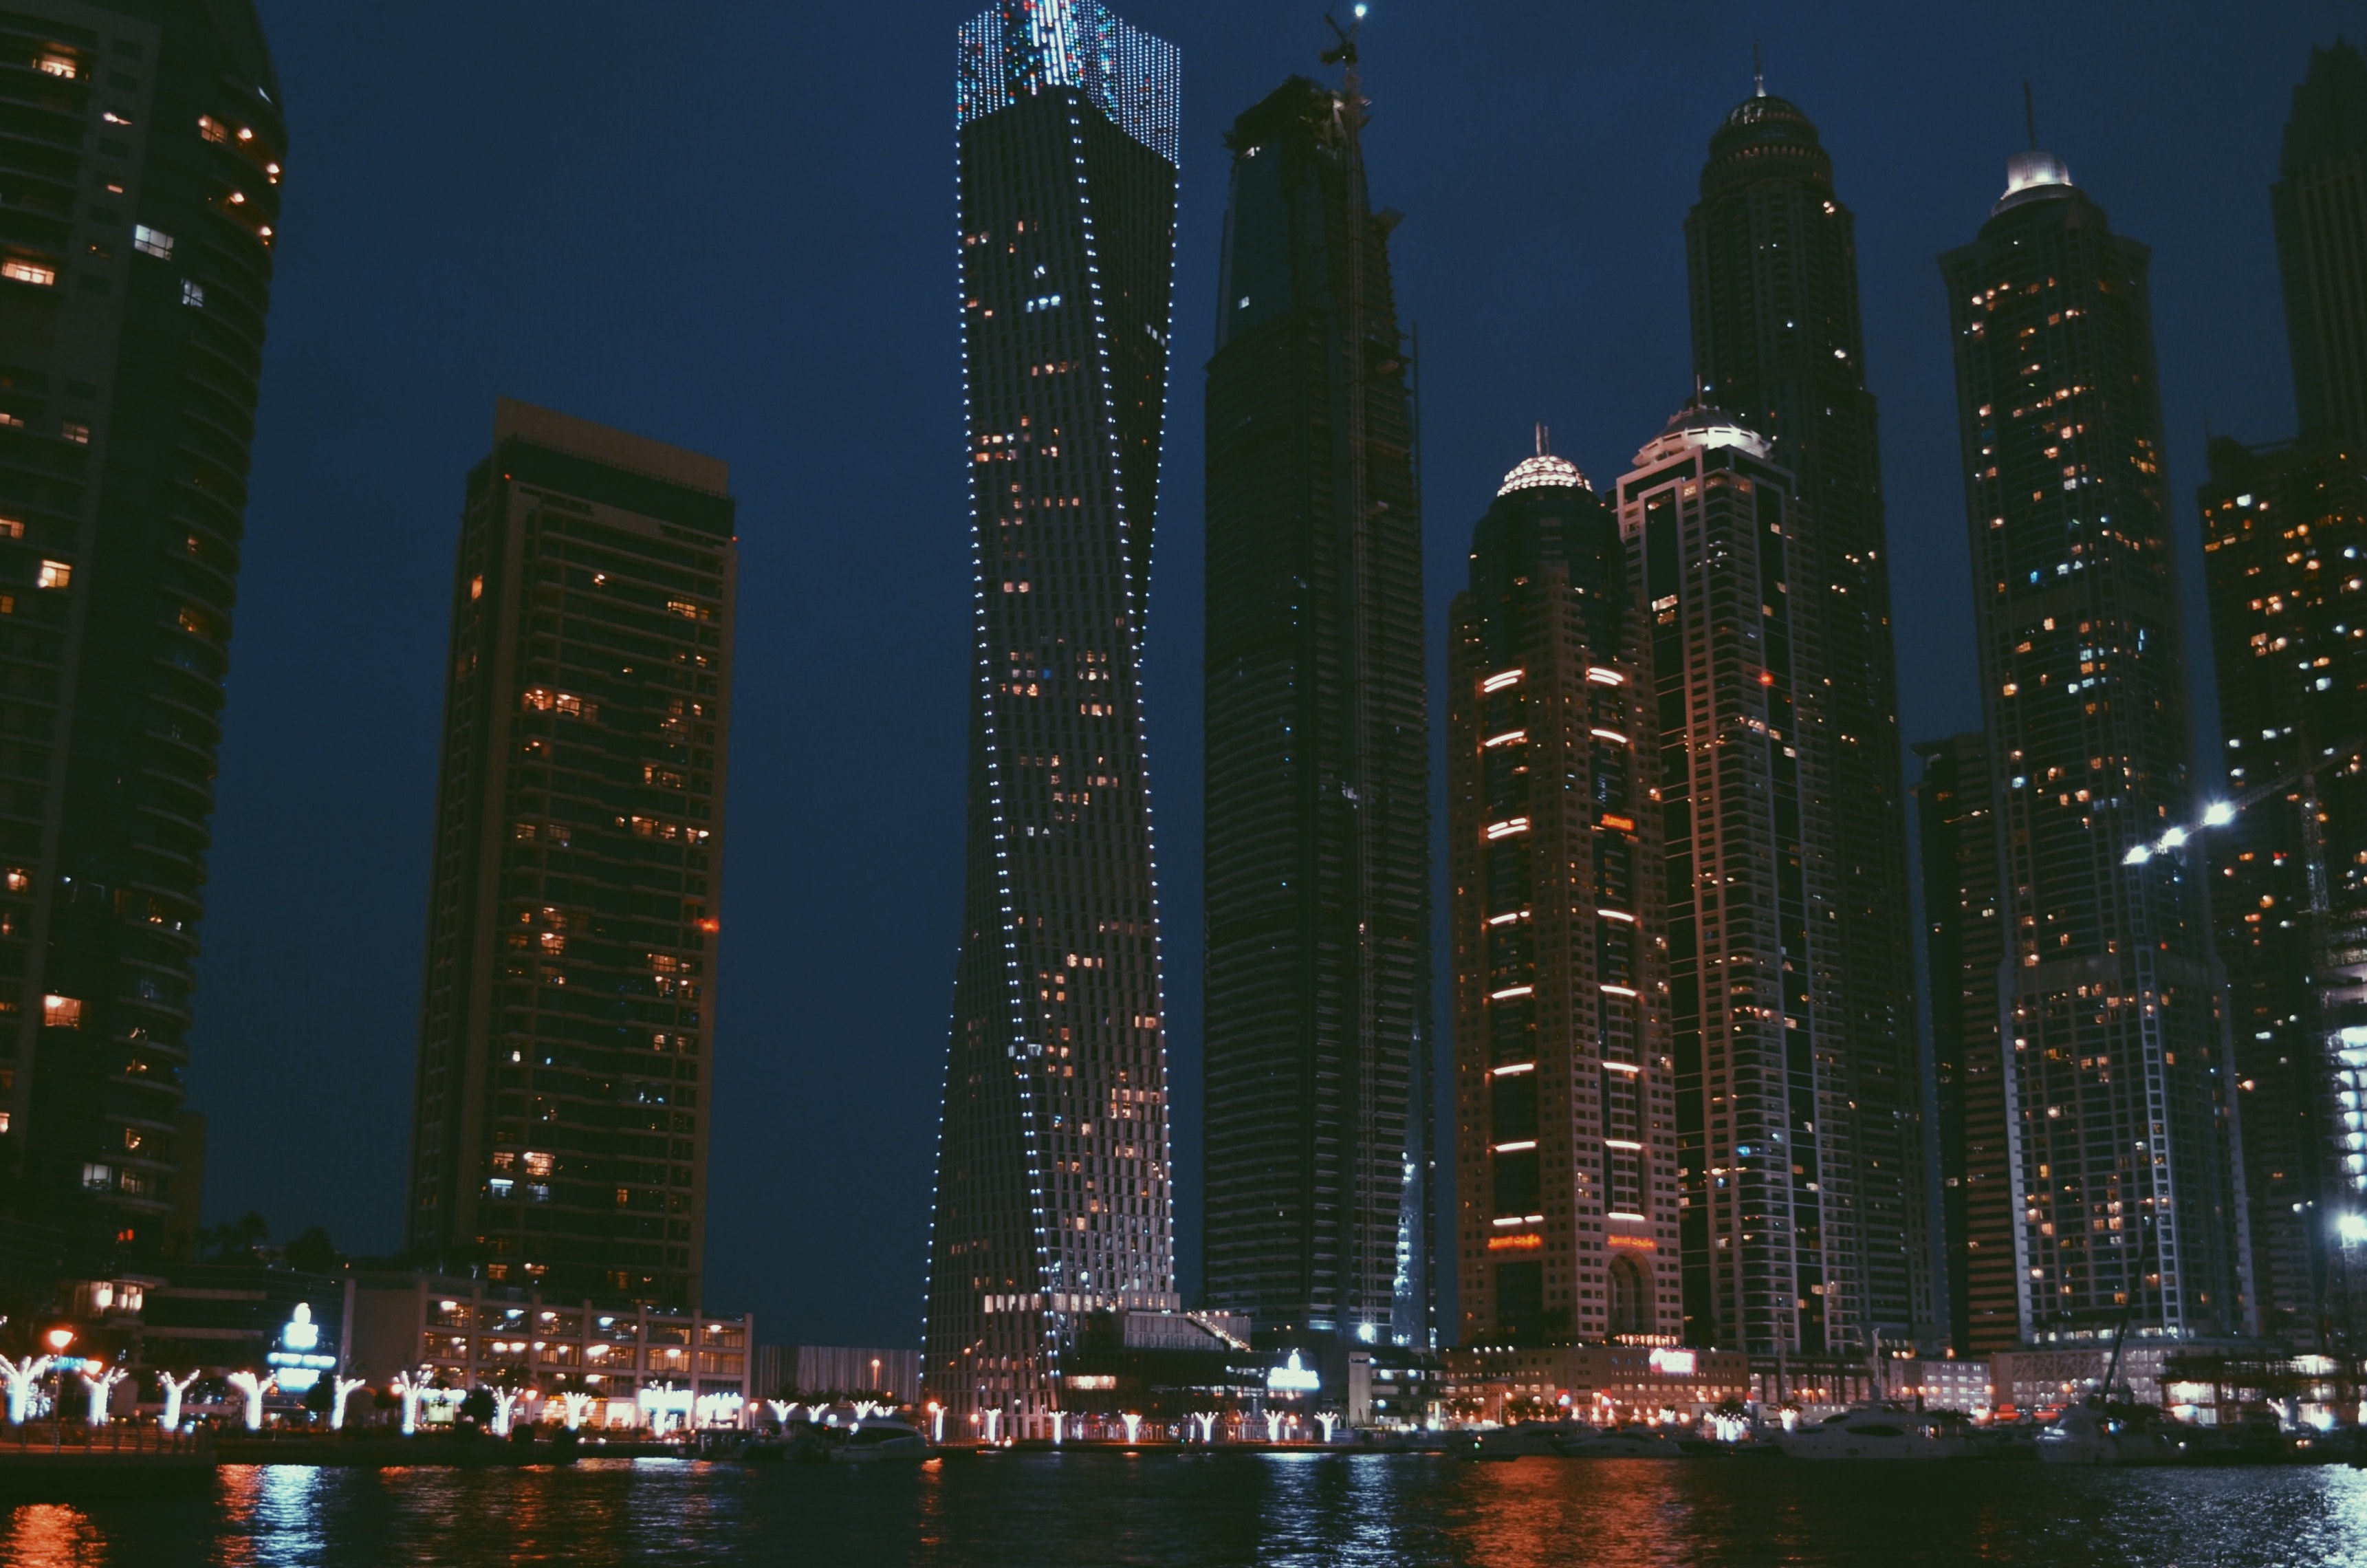 Illuminated city at night photo